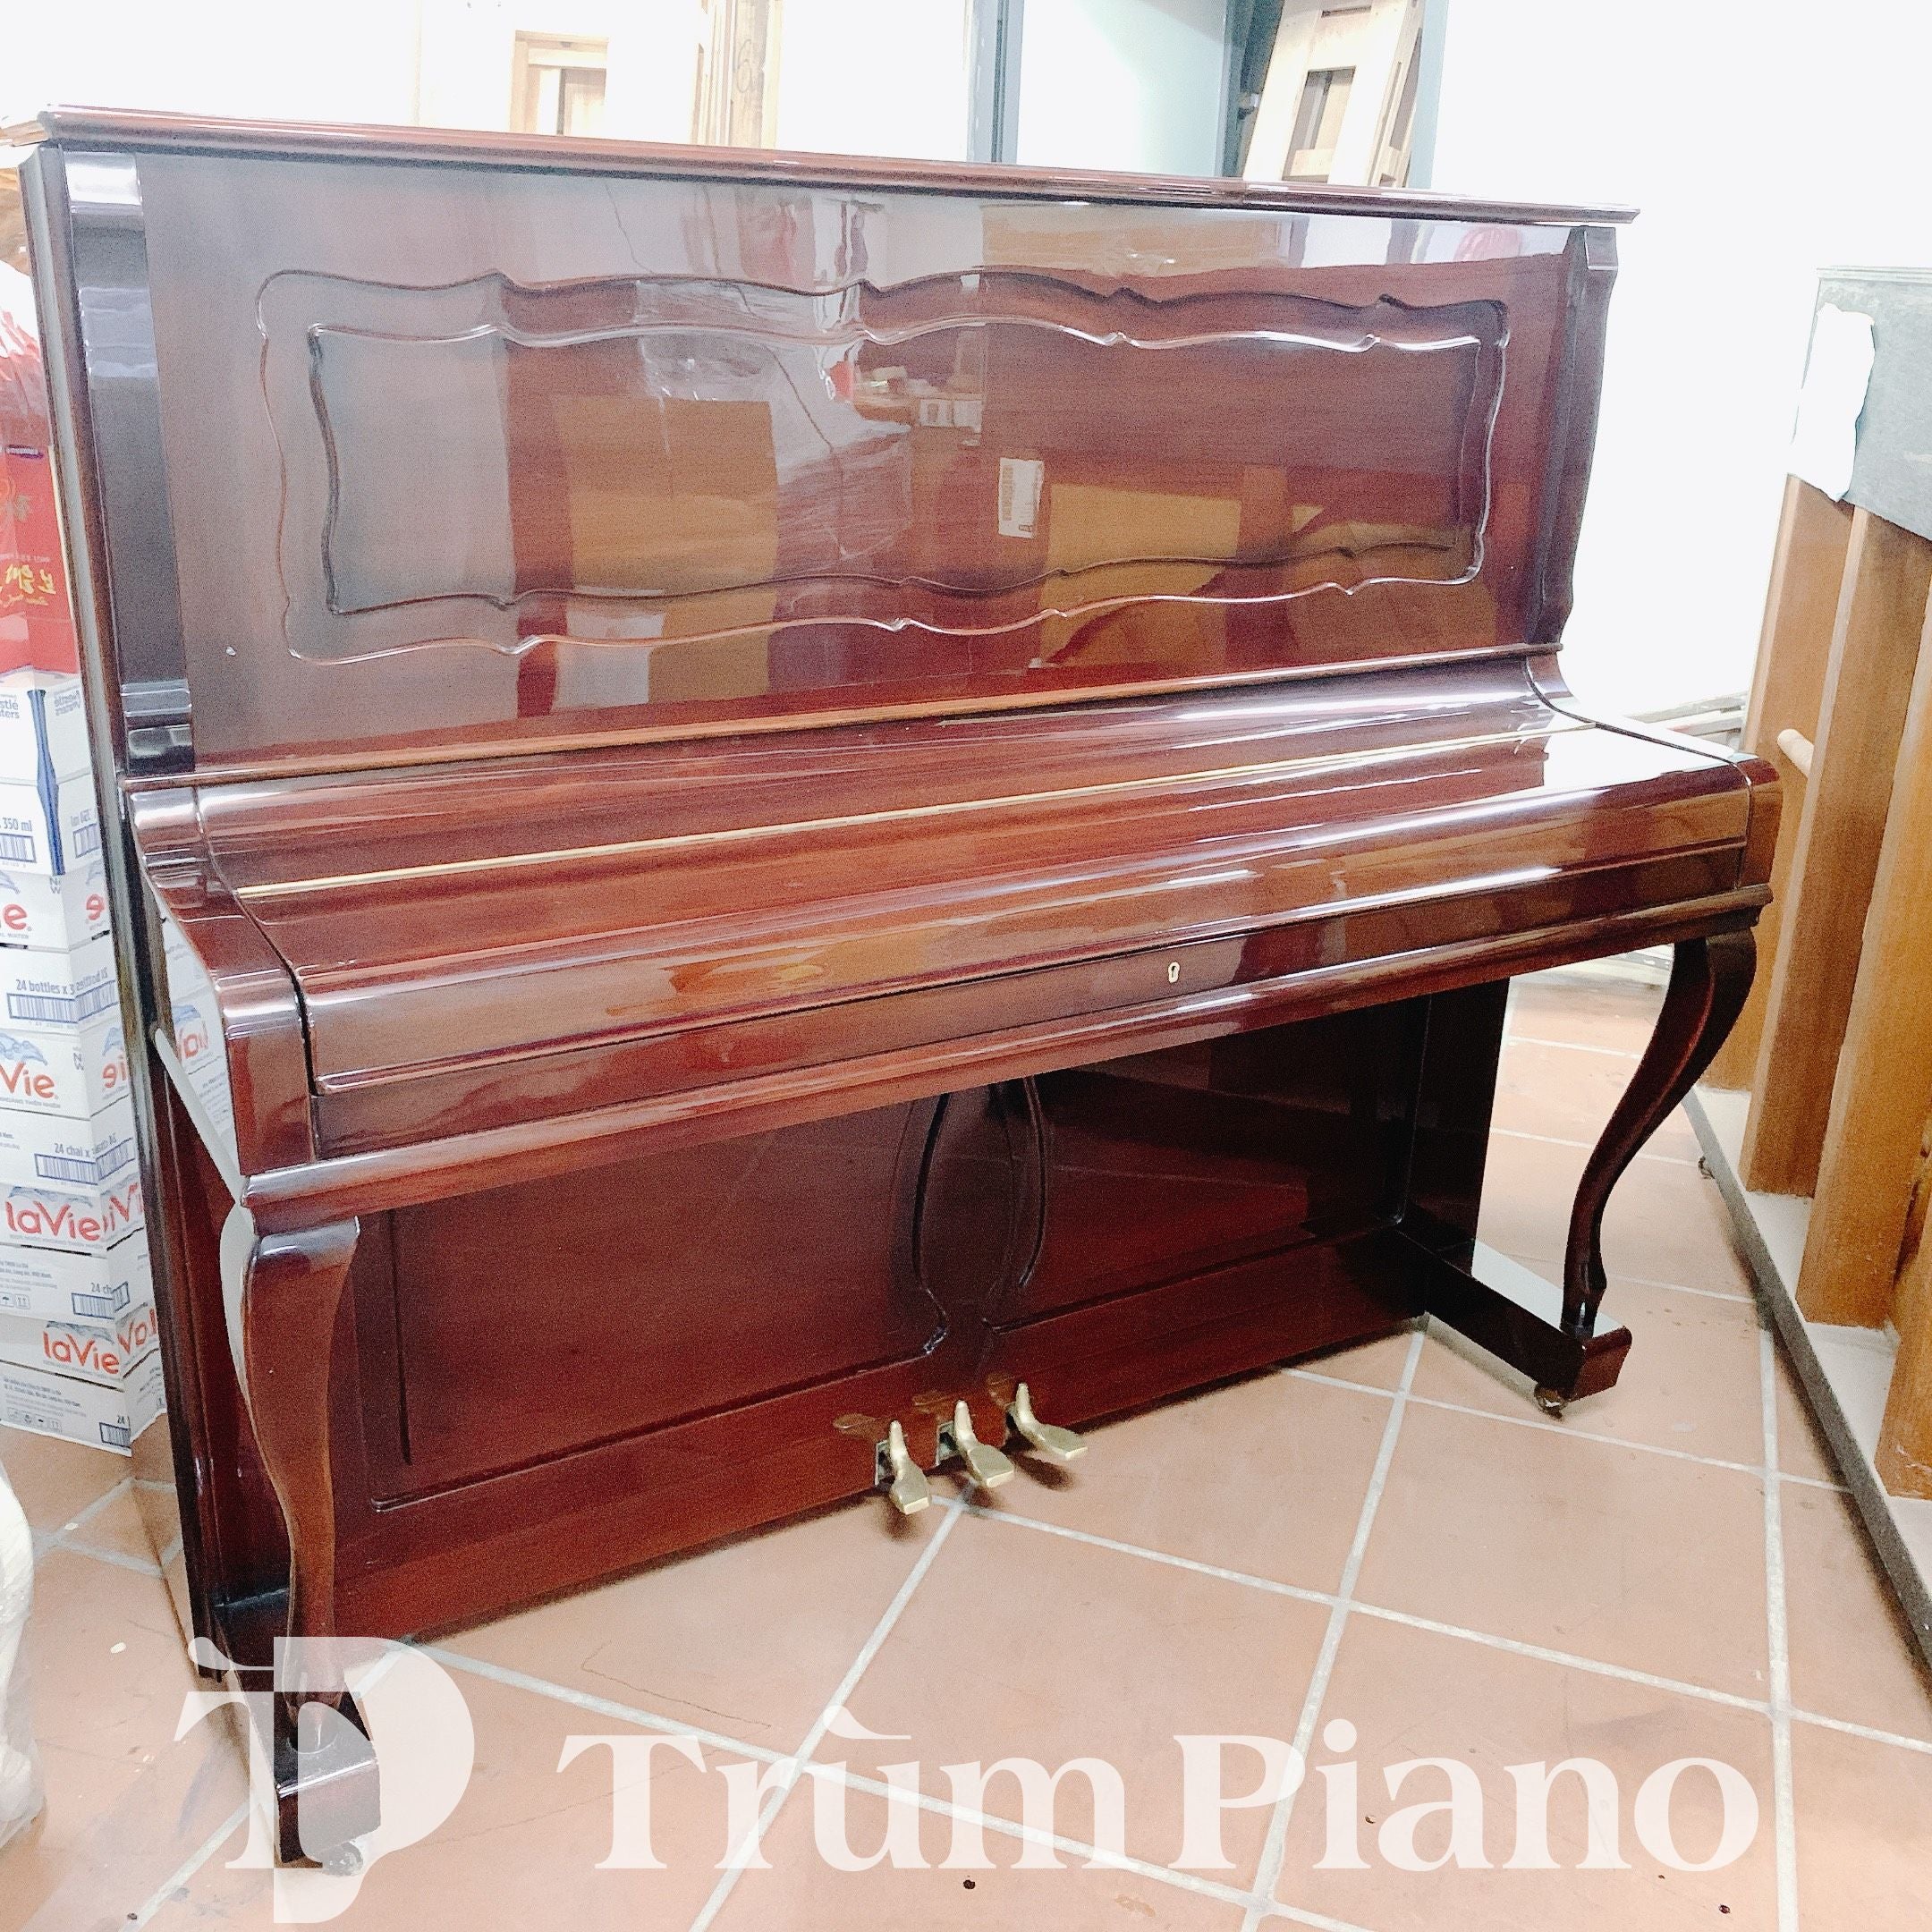 Đàn Piano Gershwin G1000